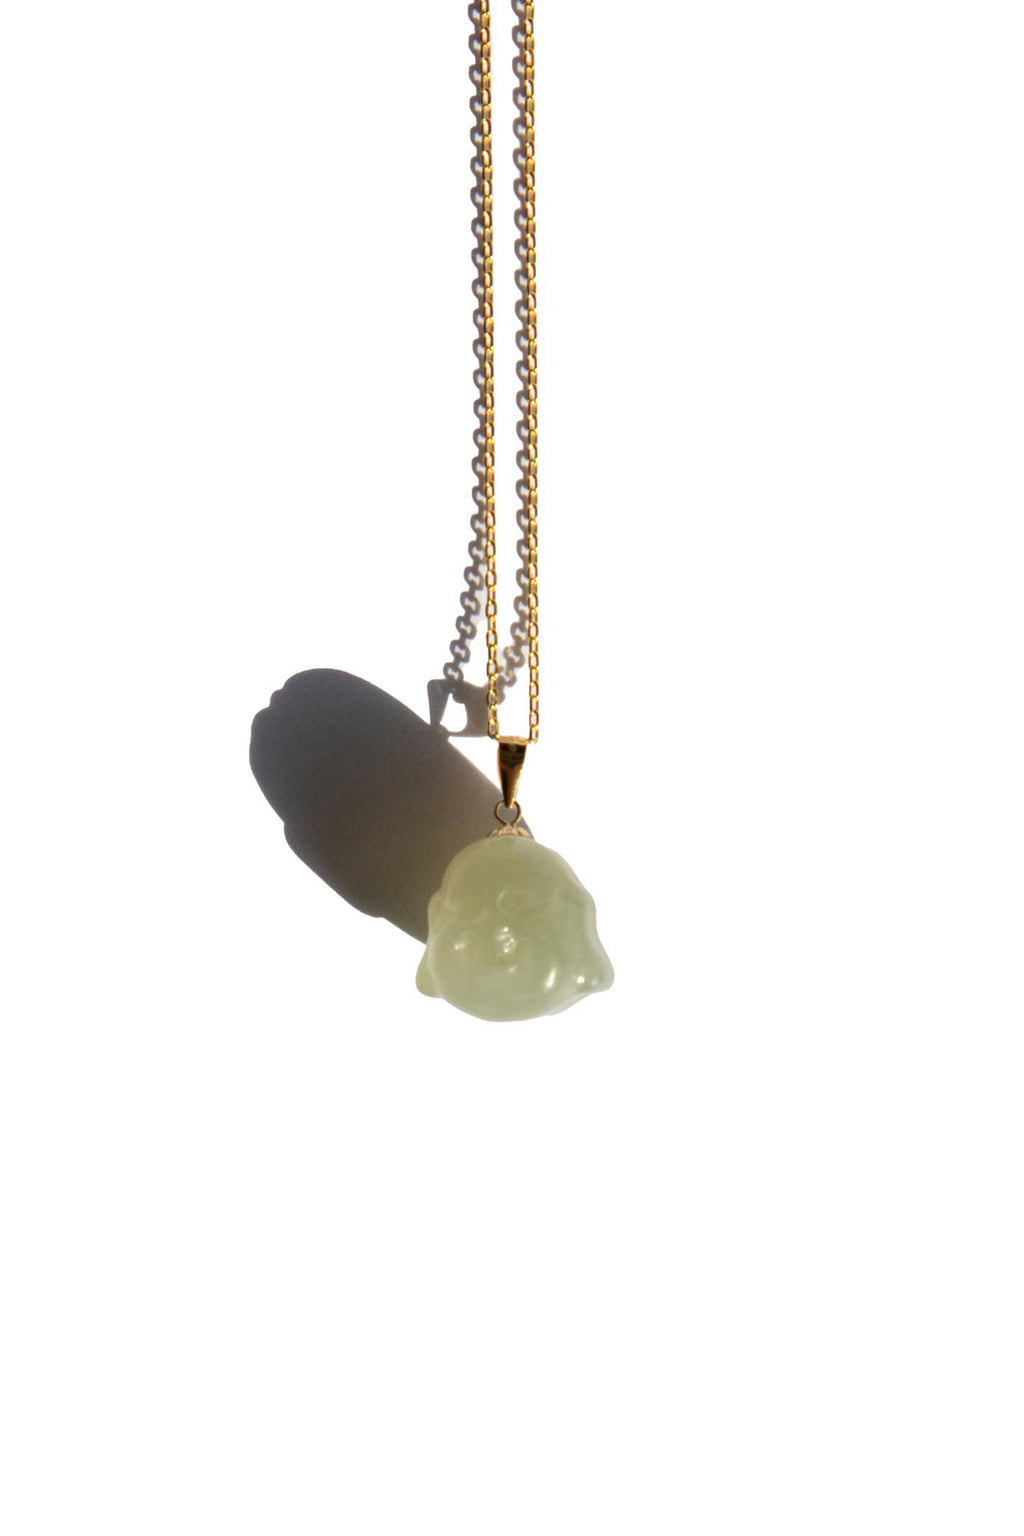 seree-jade-necklace-with-light-green-buddha-pendant-1